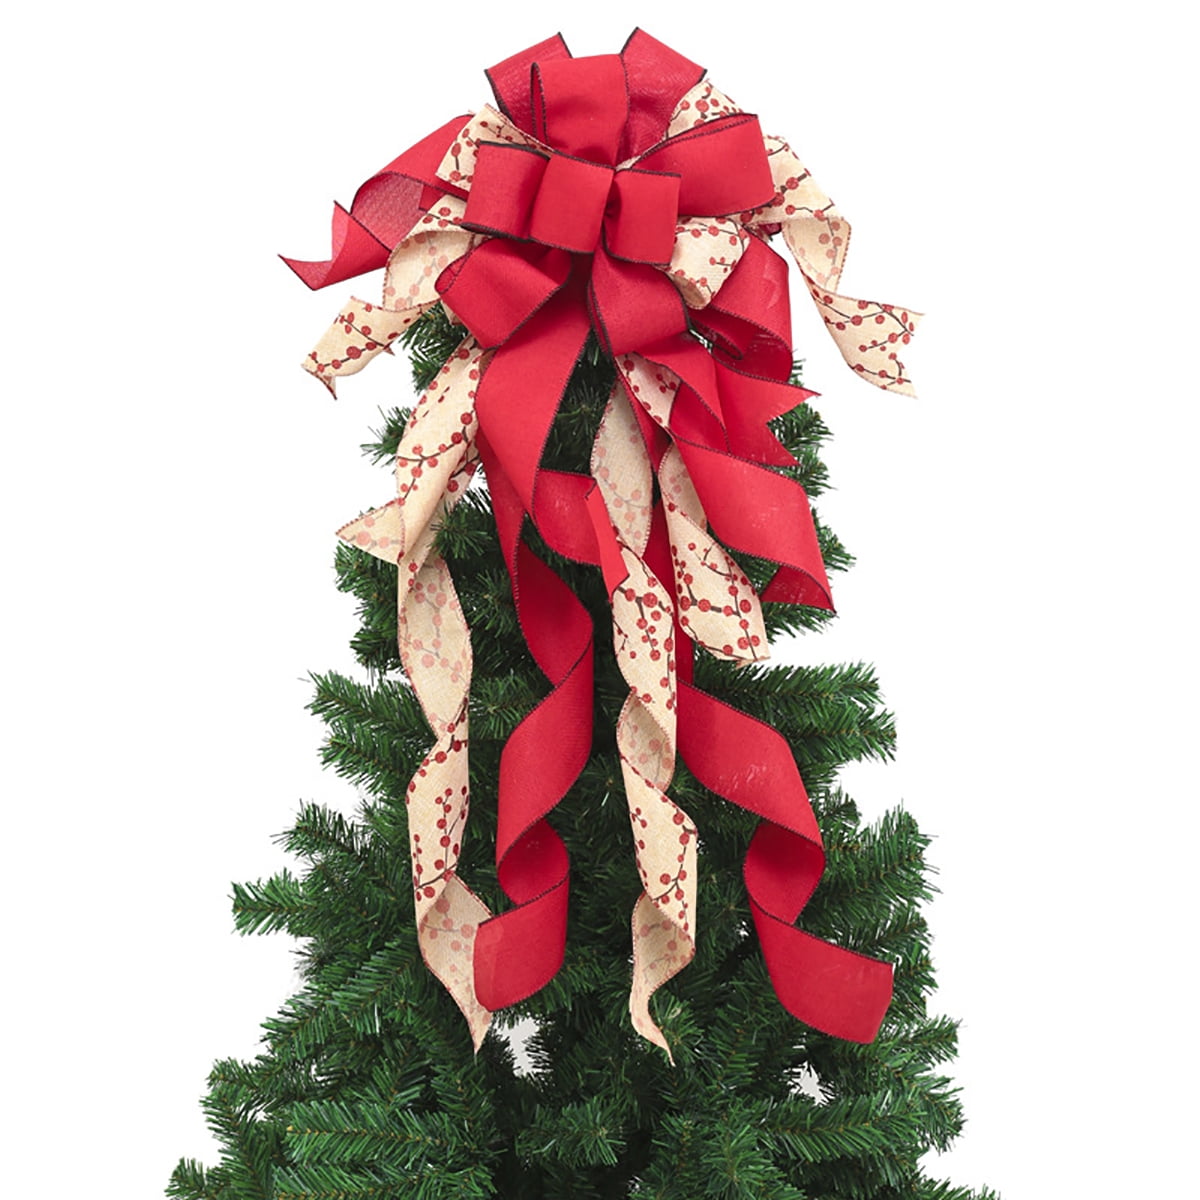 Ivory Hessian Bow 6" Handmade Cakes Wreaths Christmas Decorations 